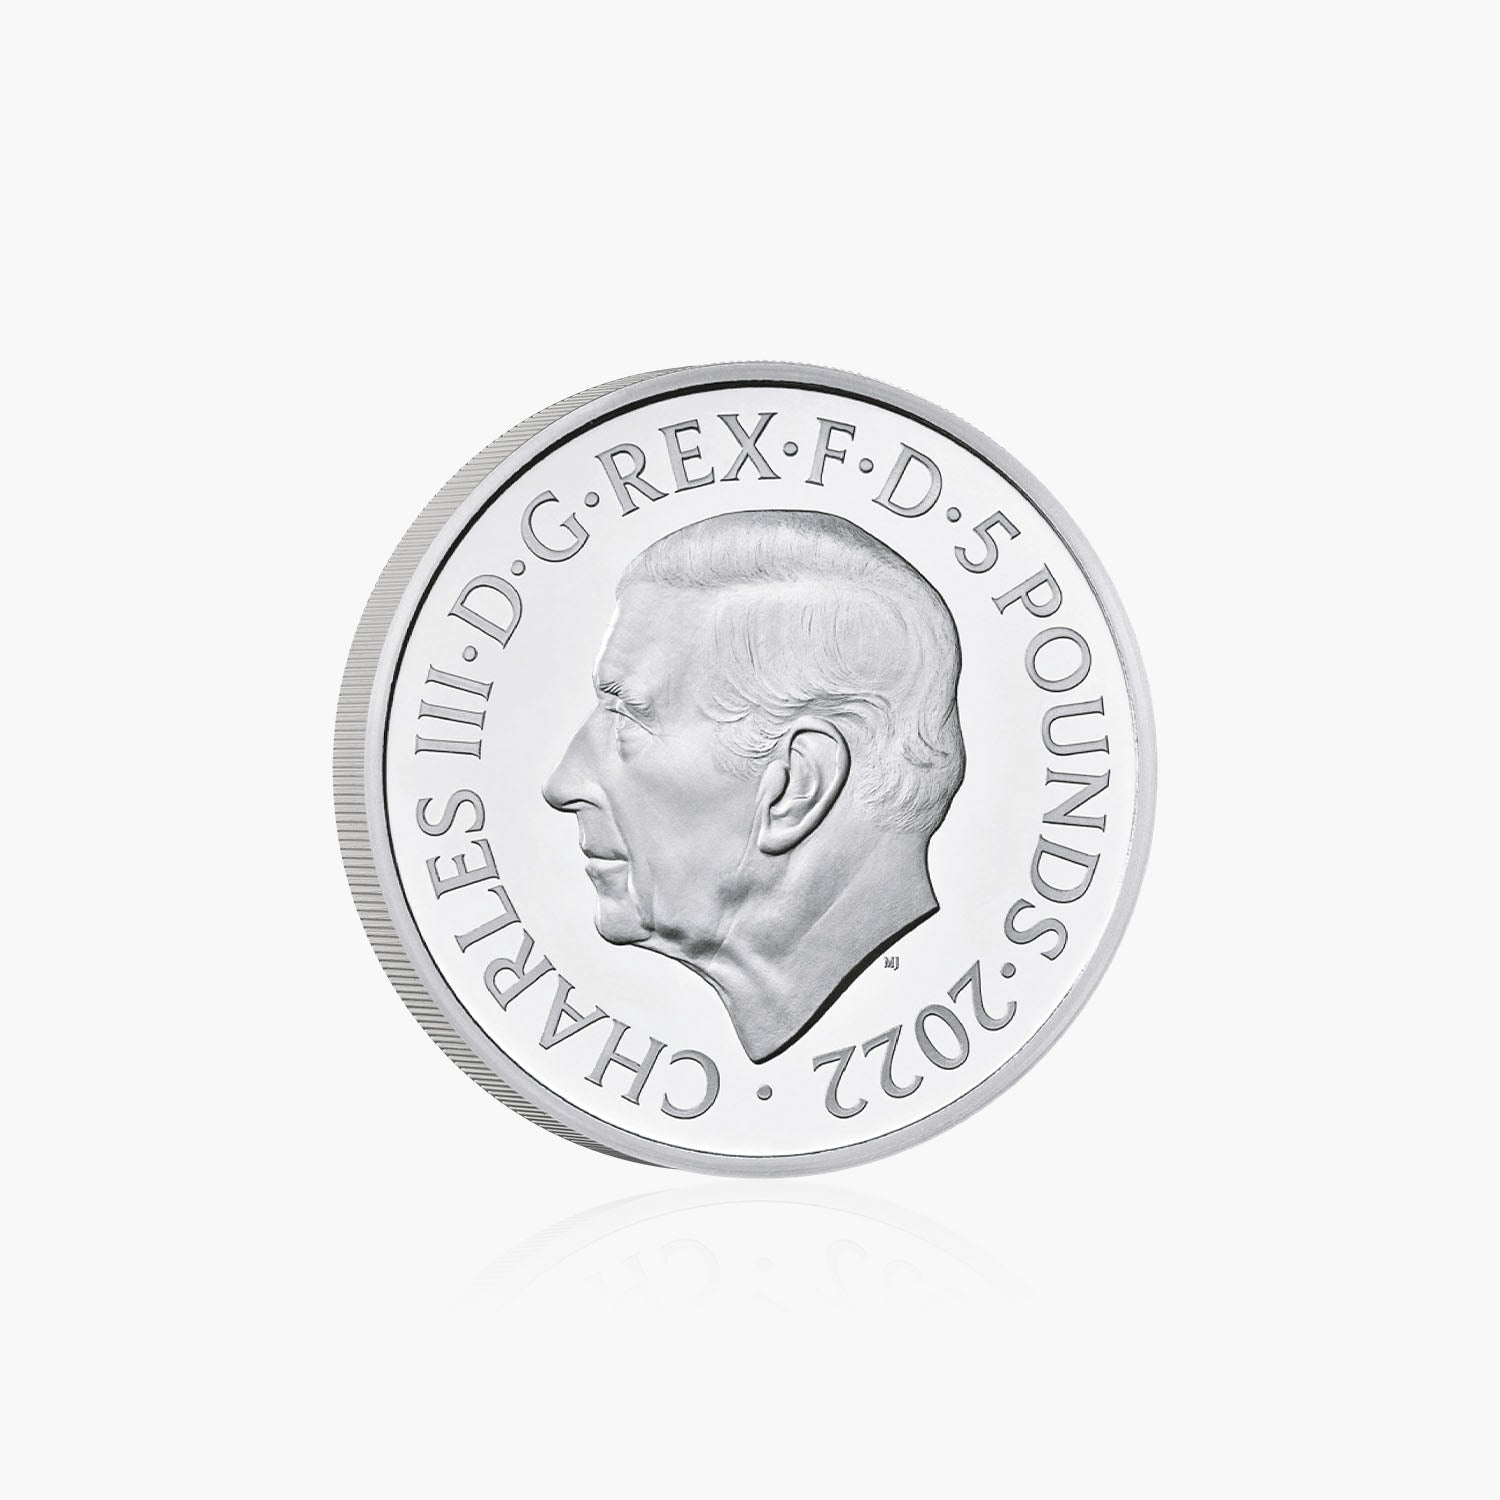 Her Majesty Queen Elizabeth II 2022 £5 Coin - King Charles III first portrait